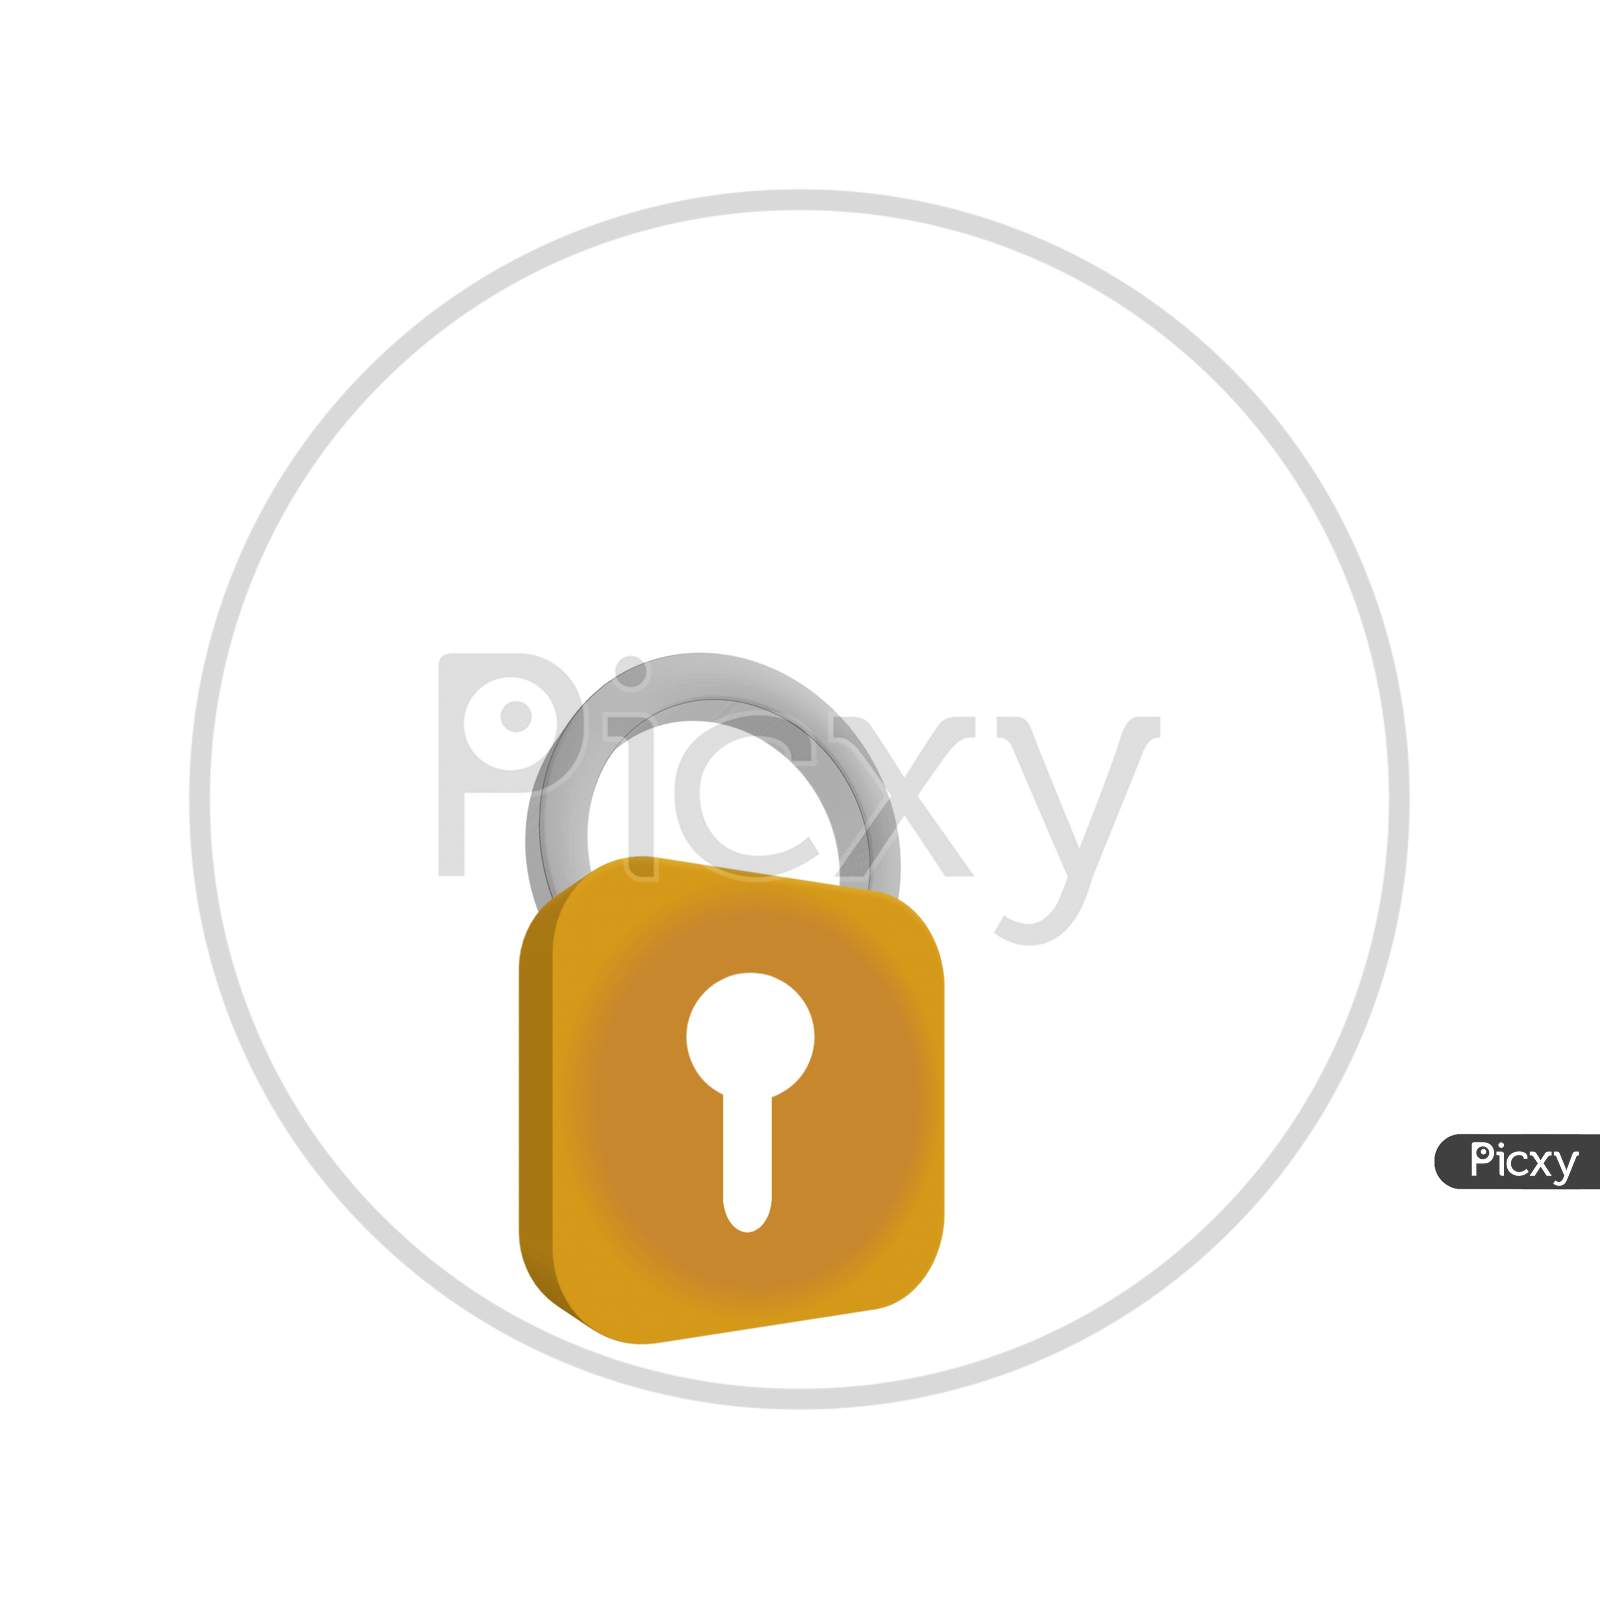 Lock icon design in white background